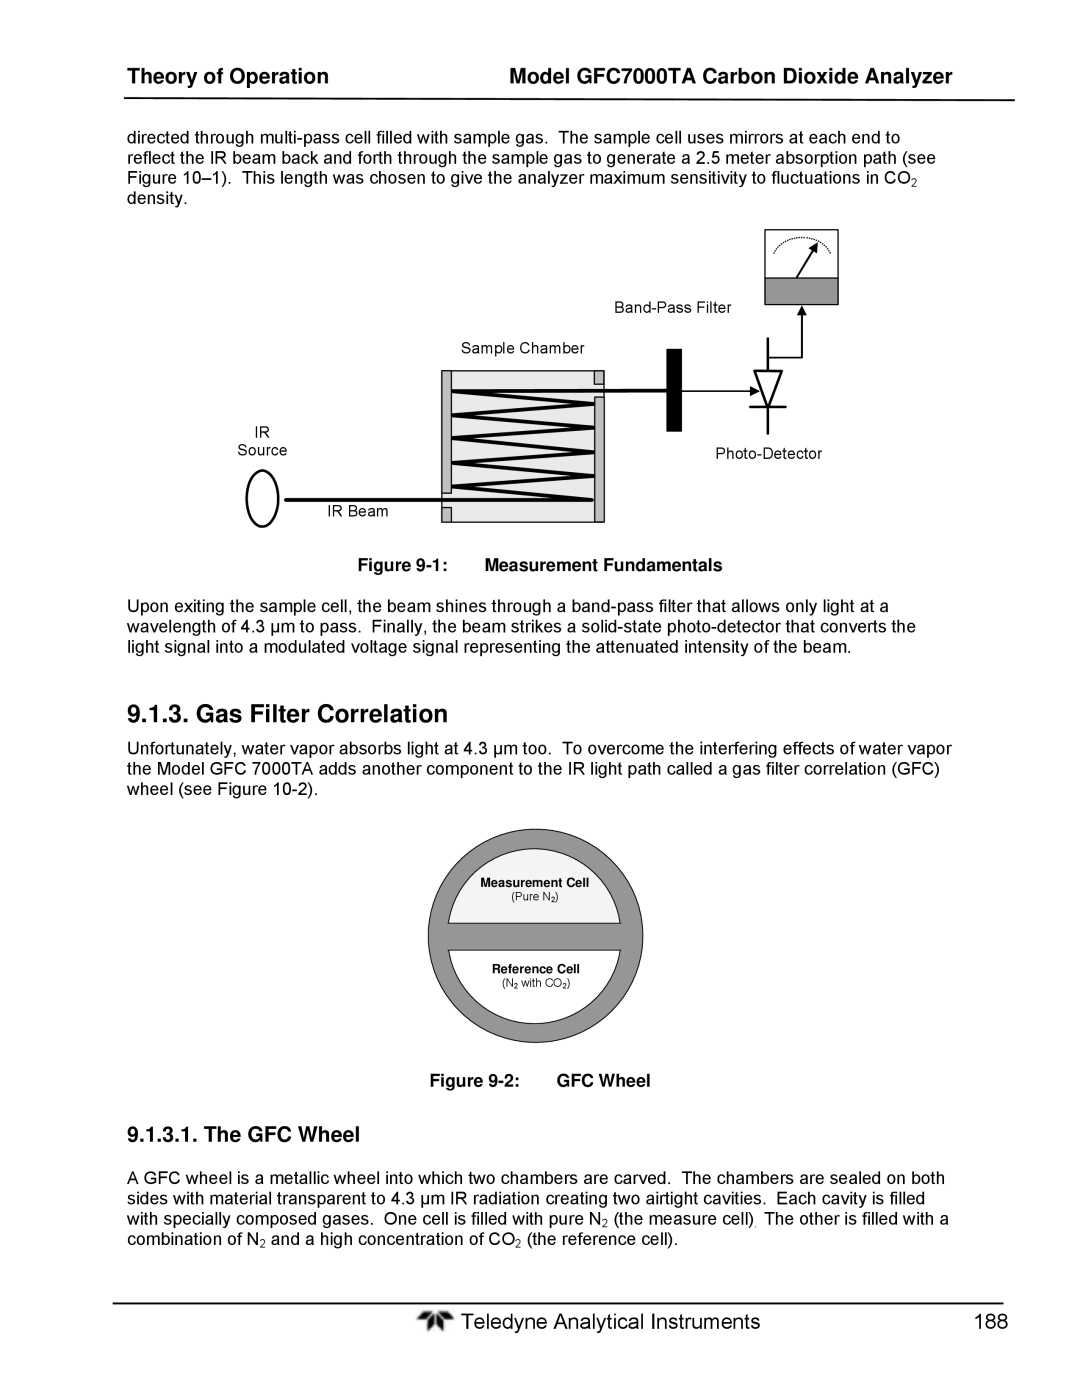 Teledyne gfc 7000ta operation manual Gas Filter Correlation, GFC Wheel 